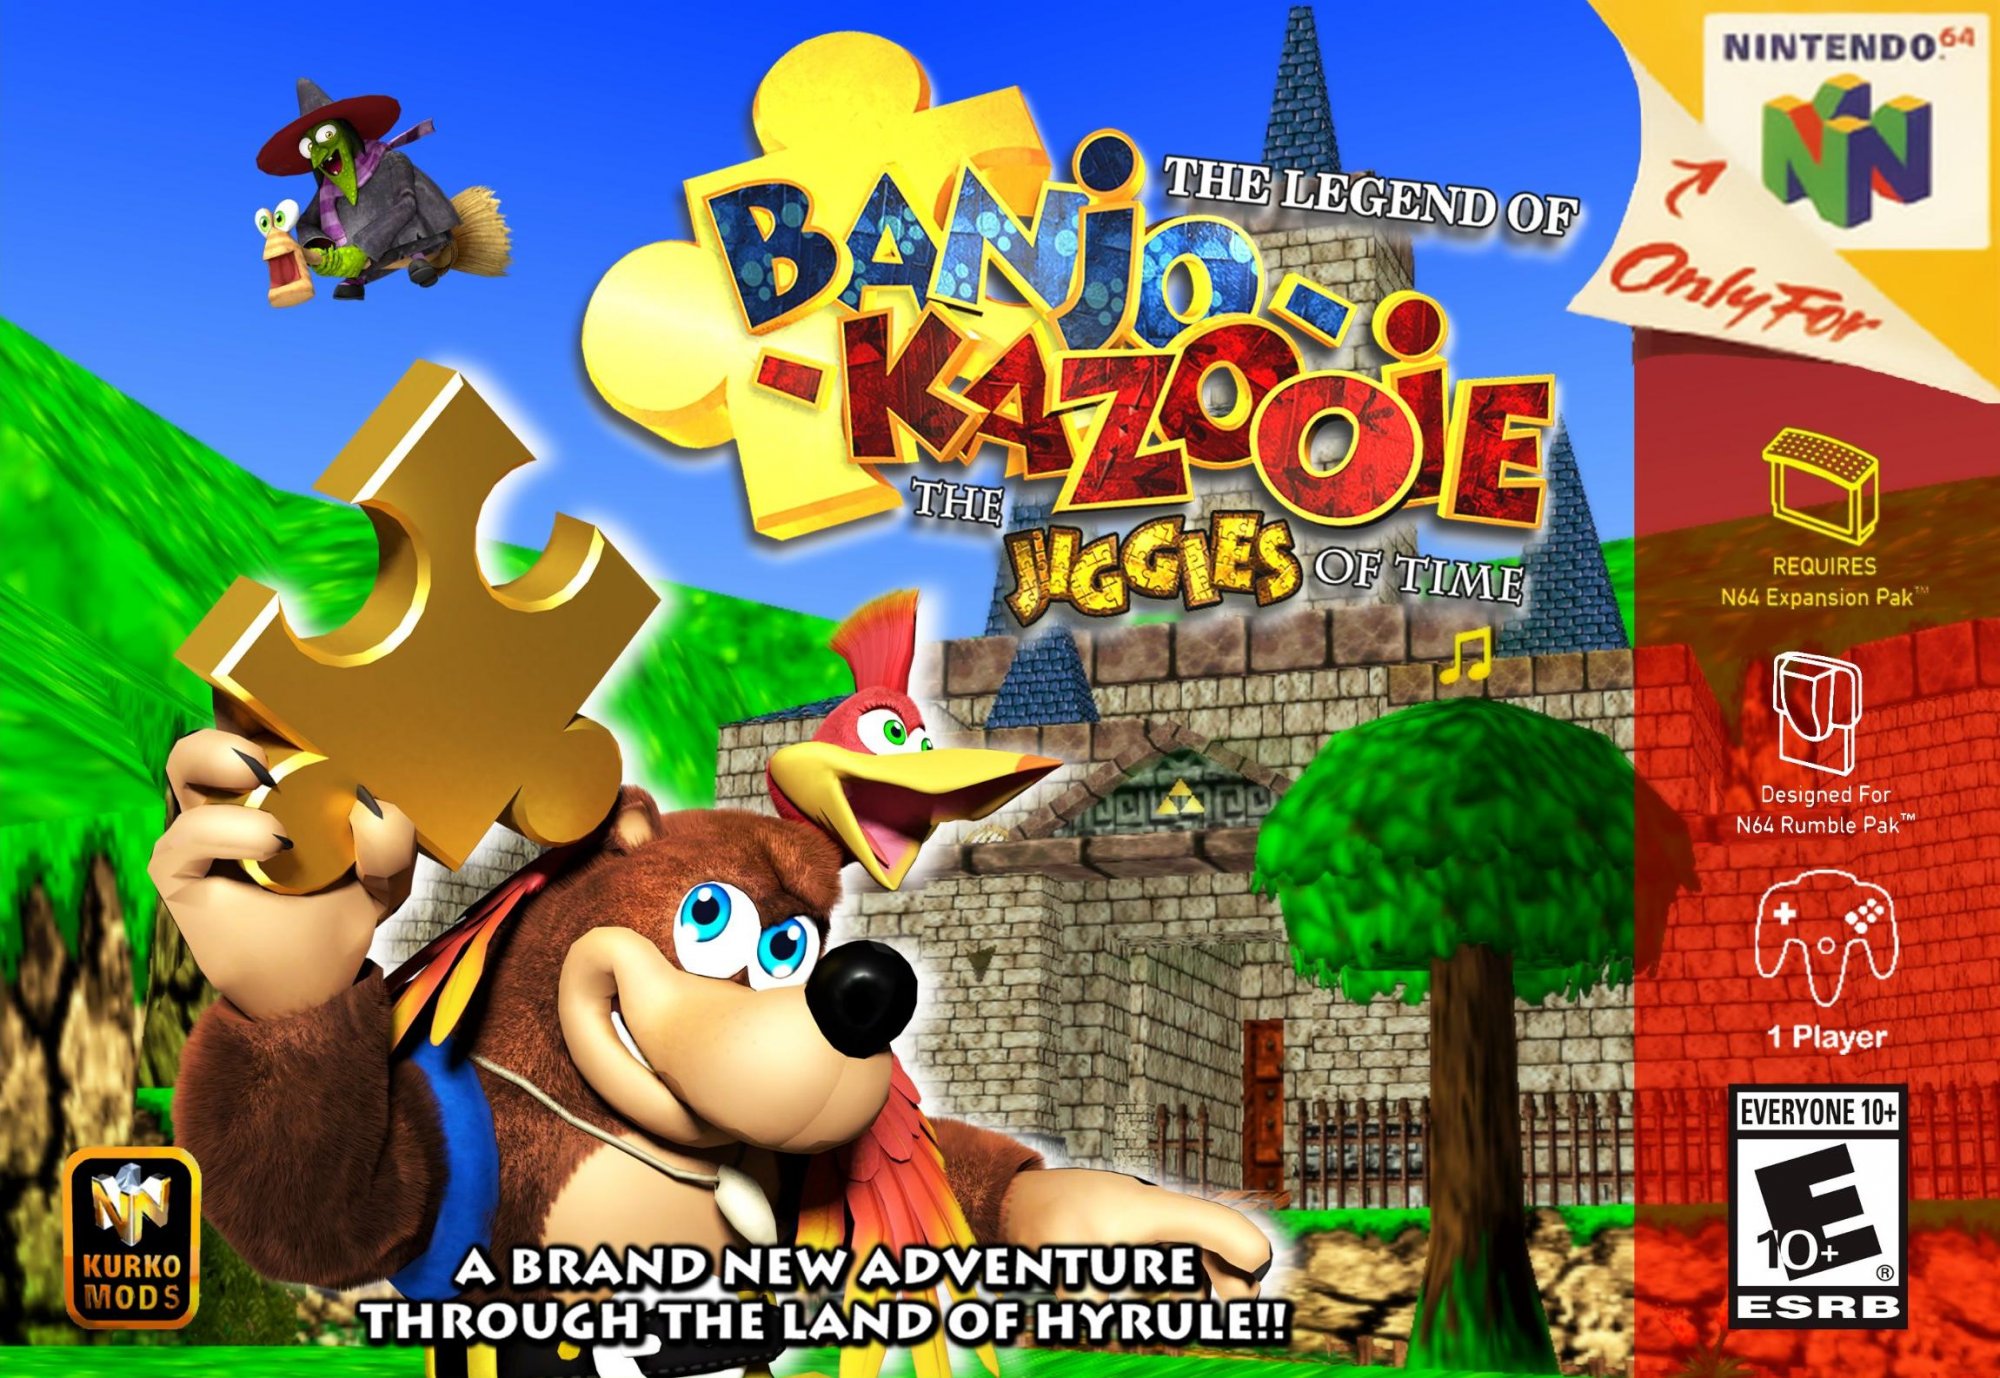 Banjo Kazooie Rom Hack! - The Jiggies of Time - xanagear on Twitch